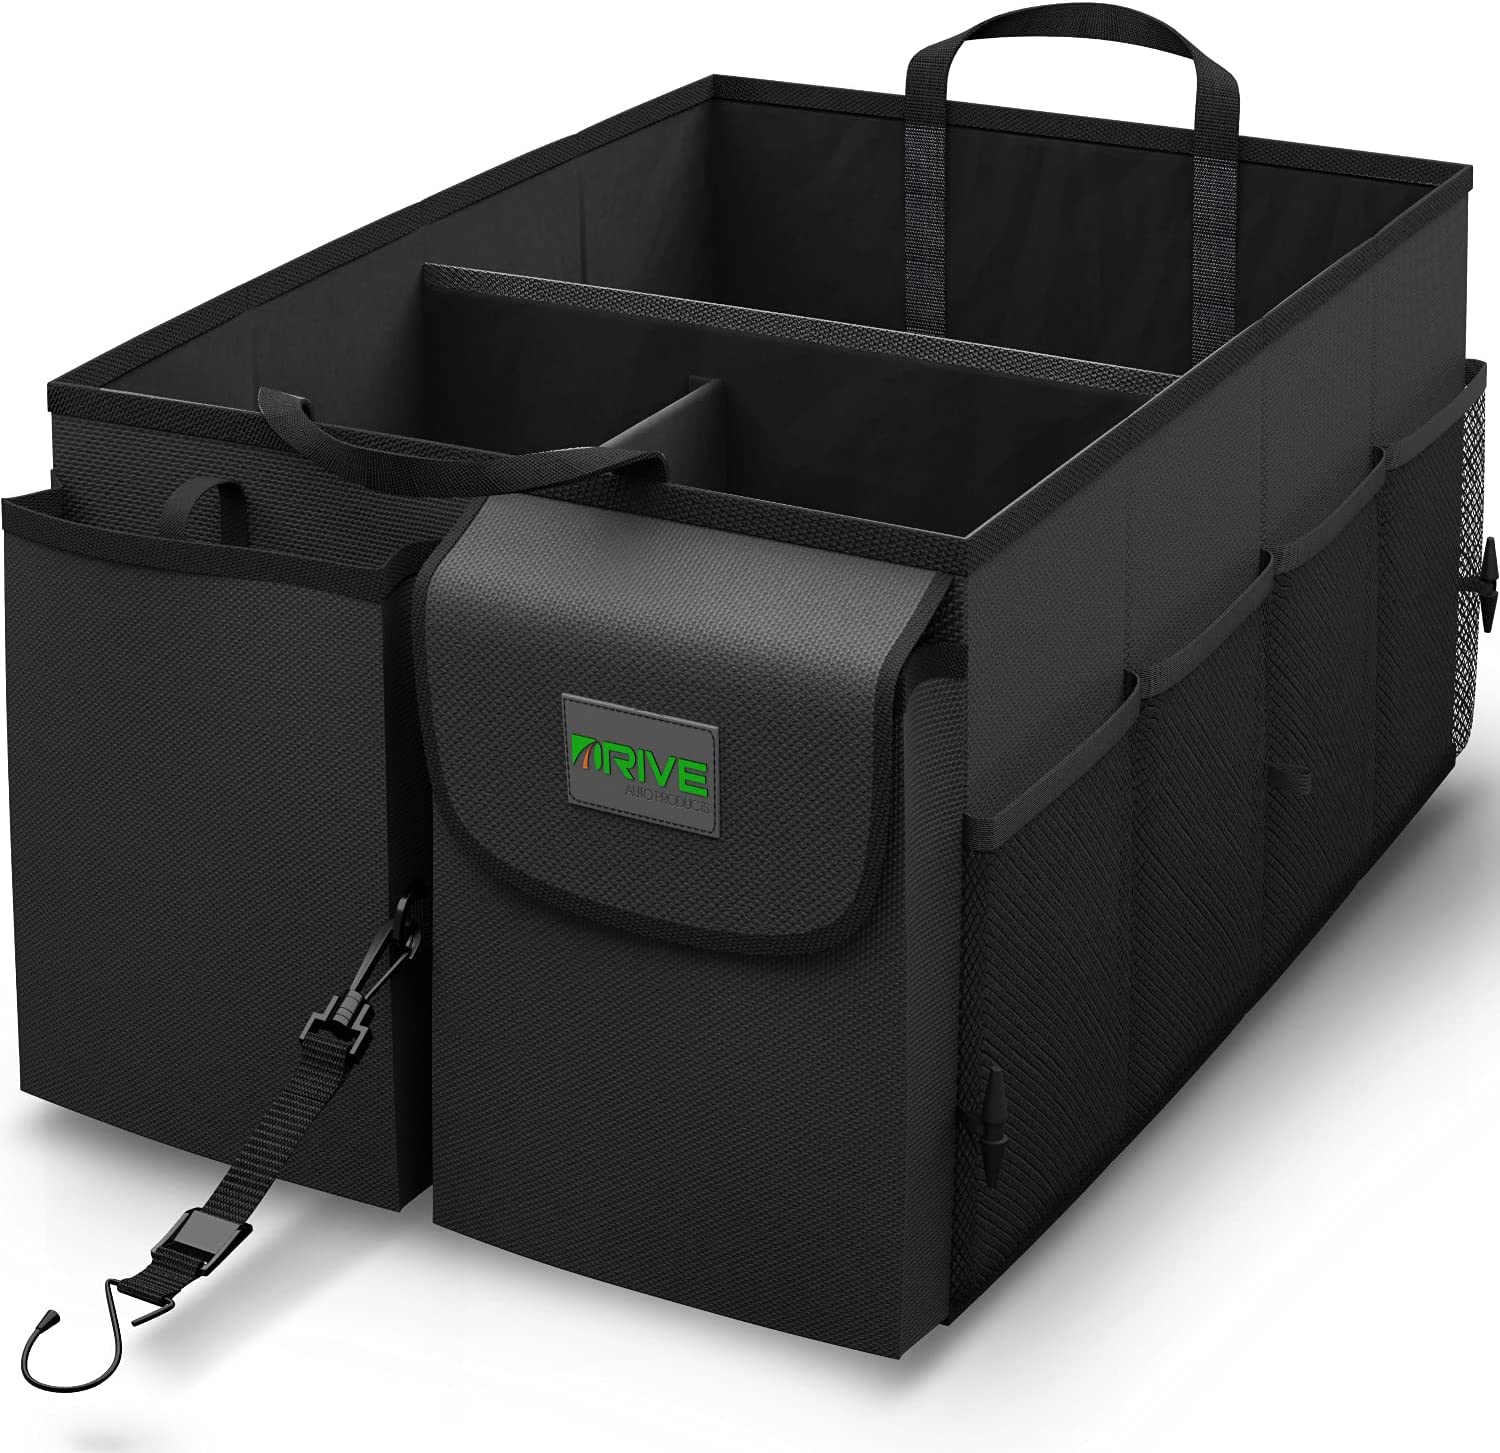 Auto Car Trunk Organizers Multi-Compartment Adjustable Storage